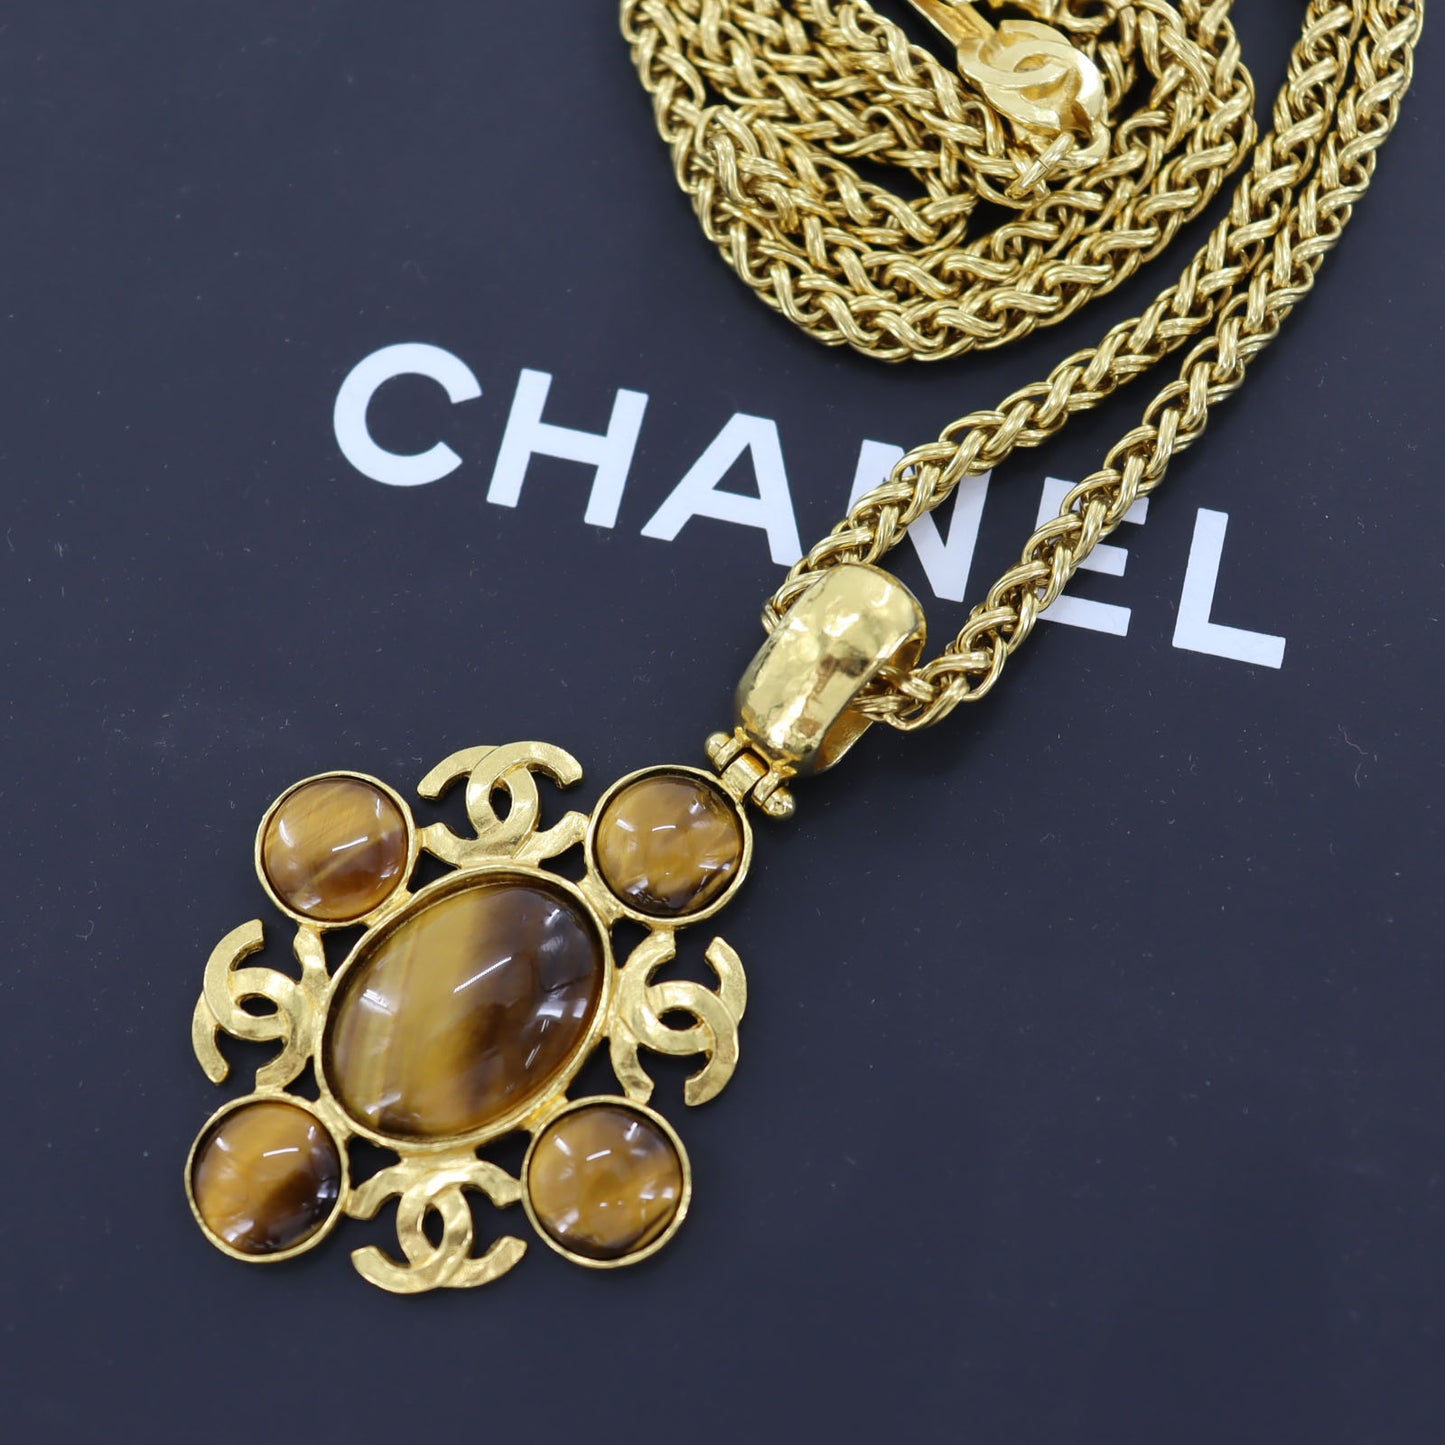 CL'S WARDROBE on X: [Fashion] #CL Chain Belt：Vintage #Chanel CC